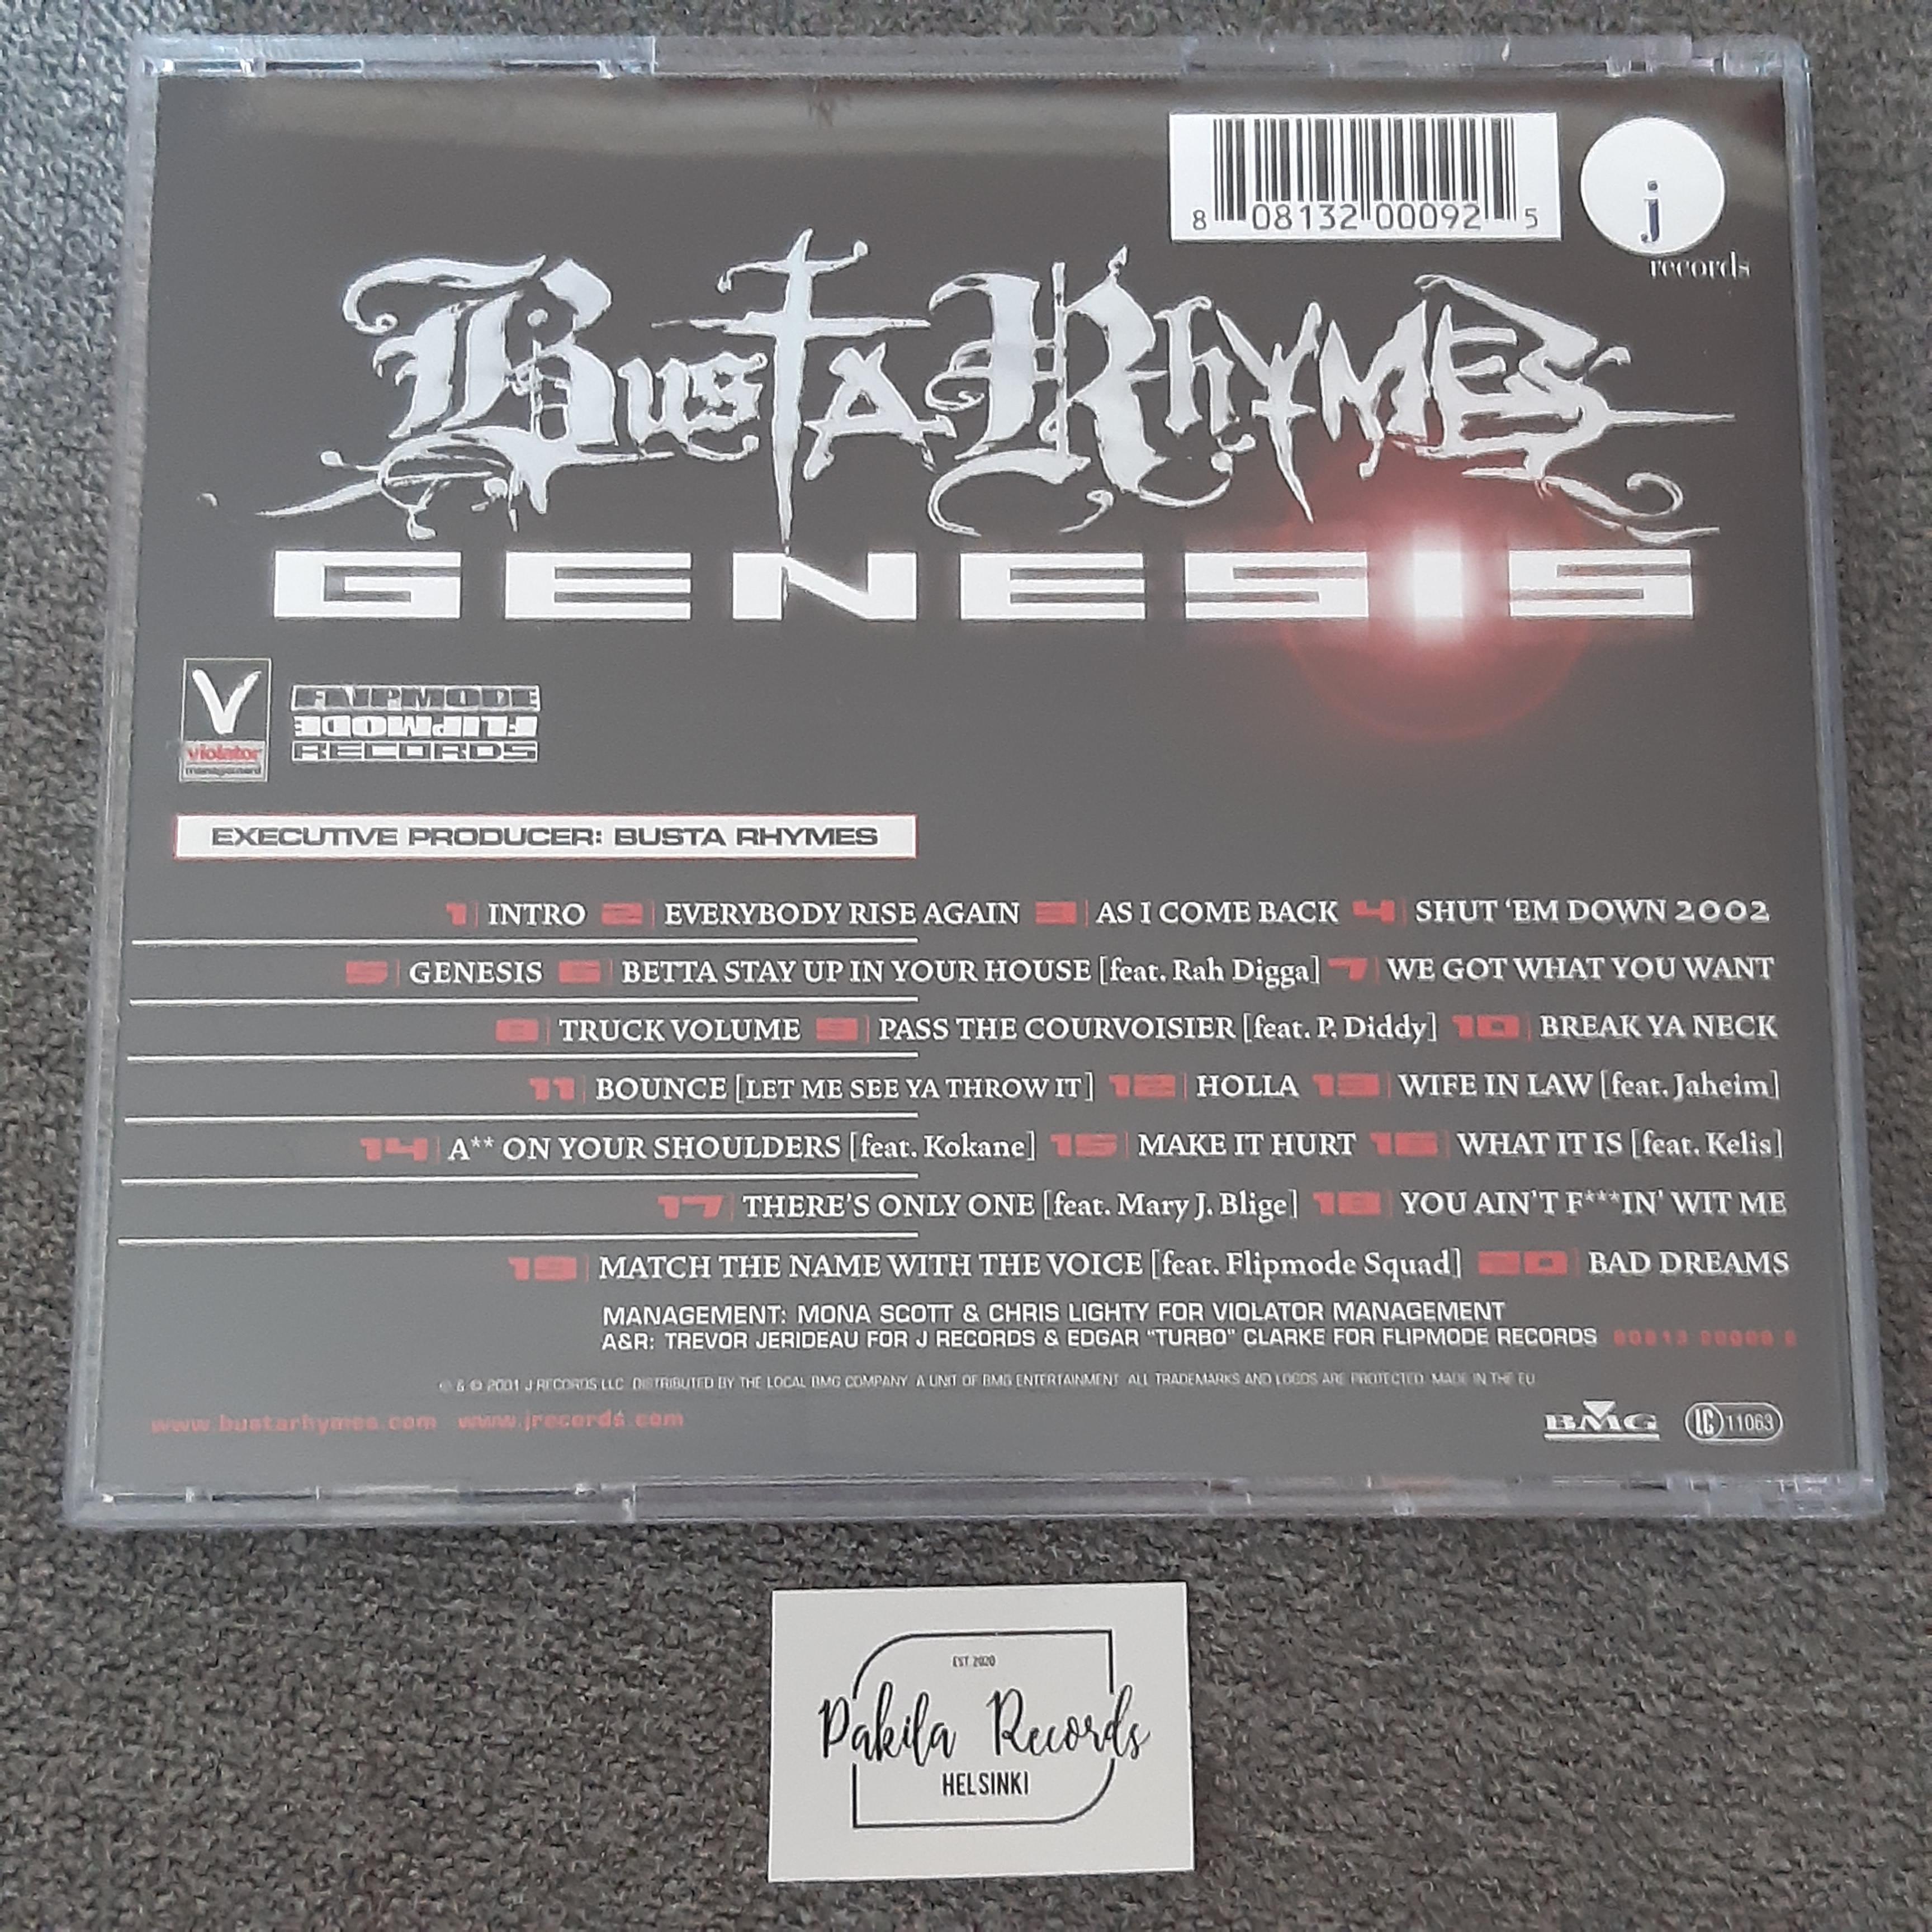 Busta Rhymes - Genesis - CD (käytetty)